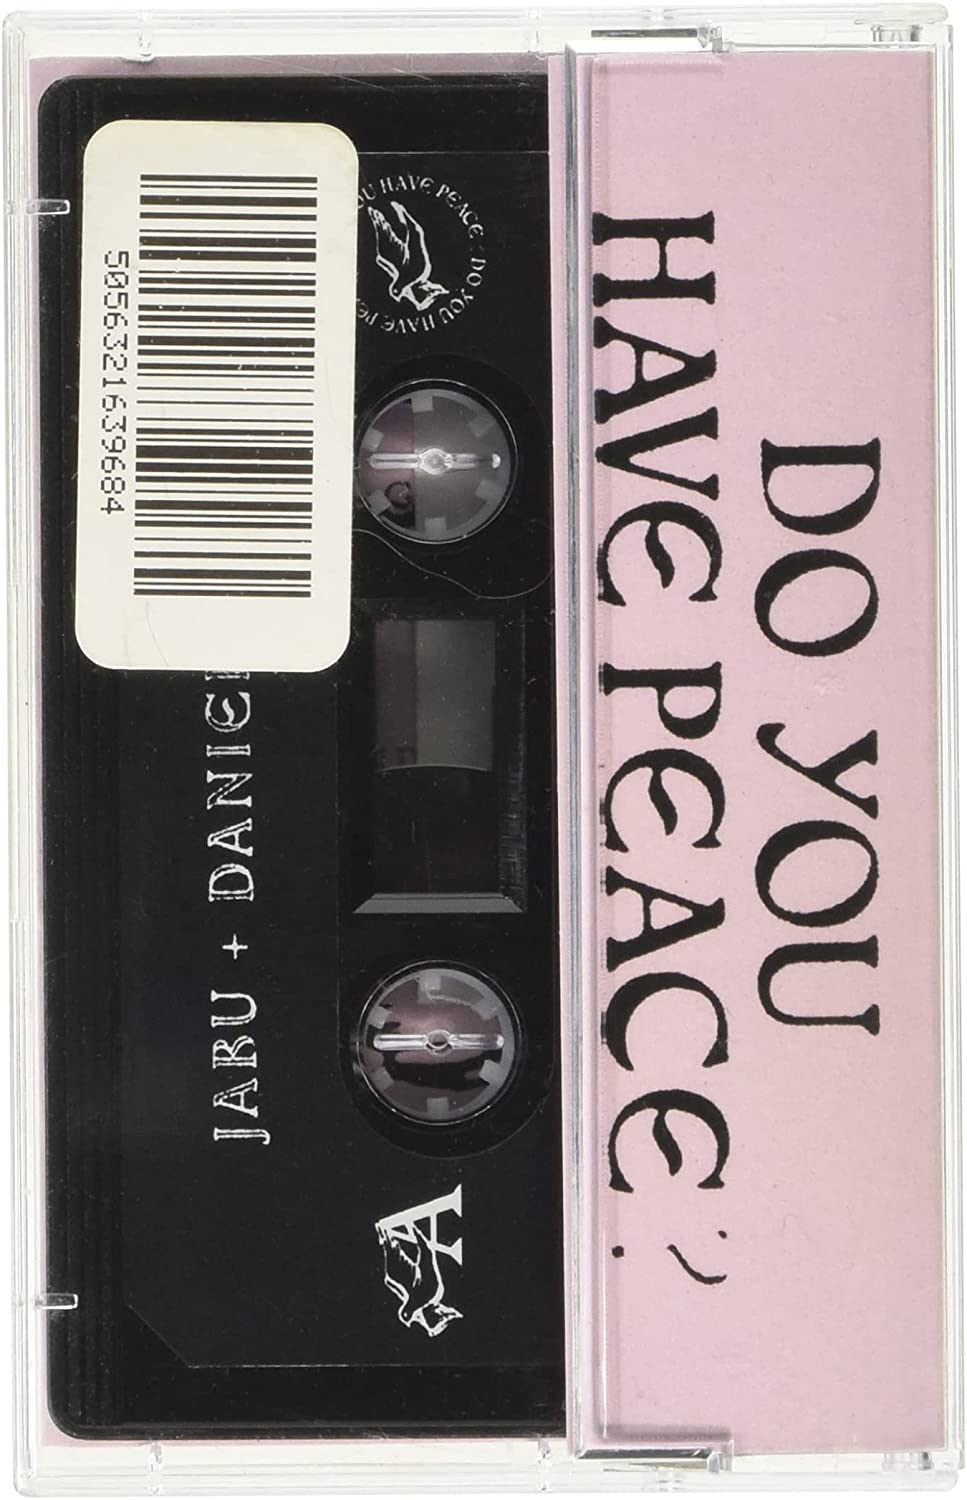 Jabu + Daniela Dyson - Jabu + Daniela Dyson [Audio Cassette]